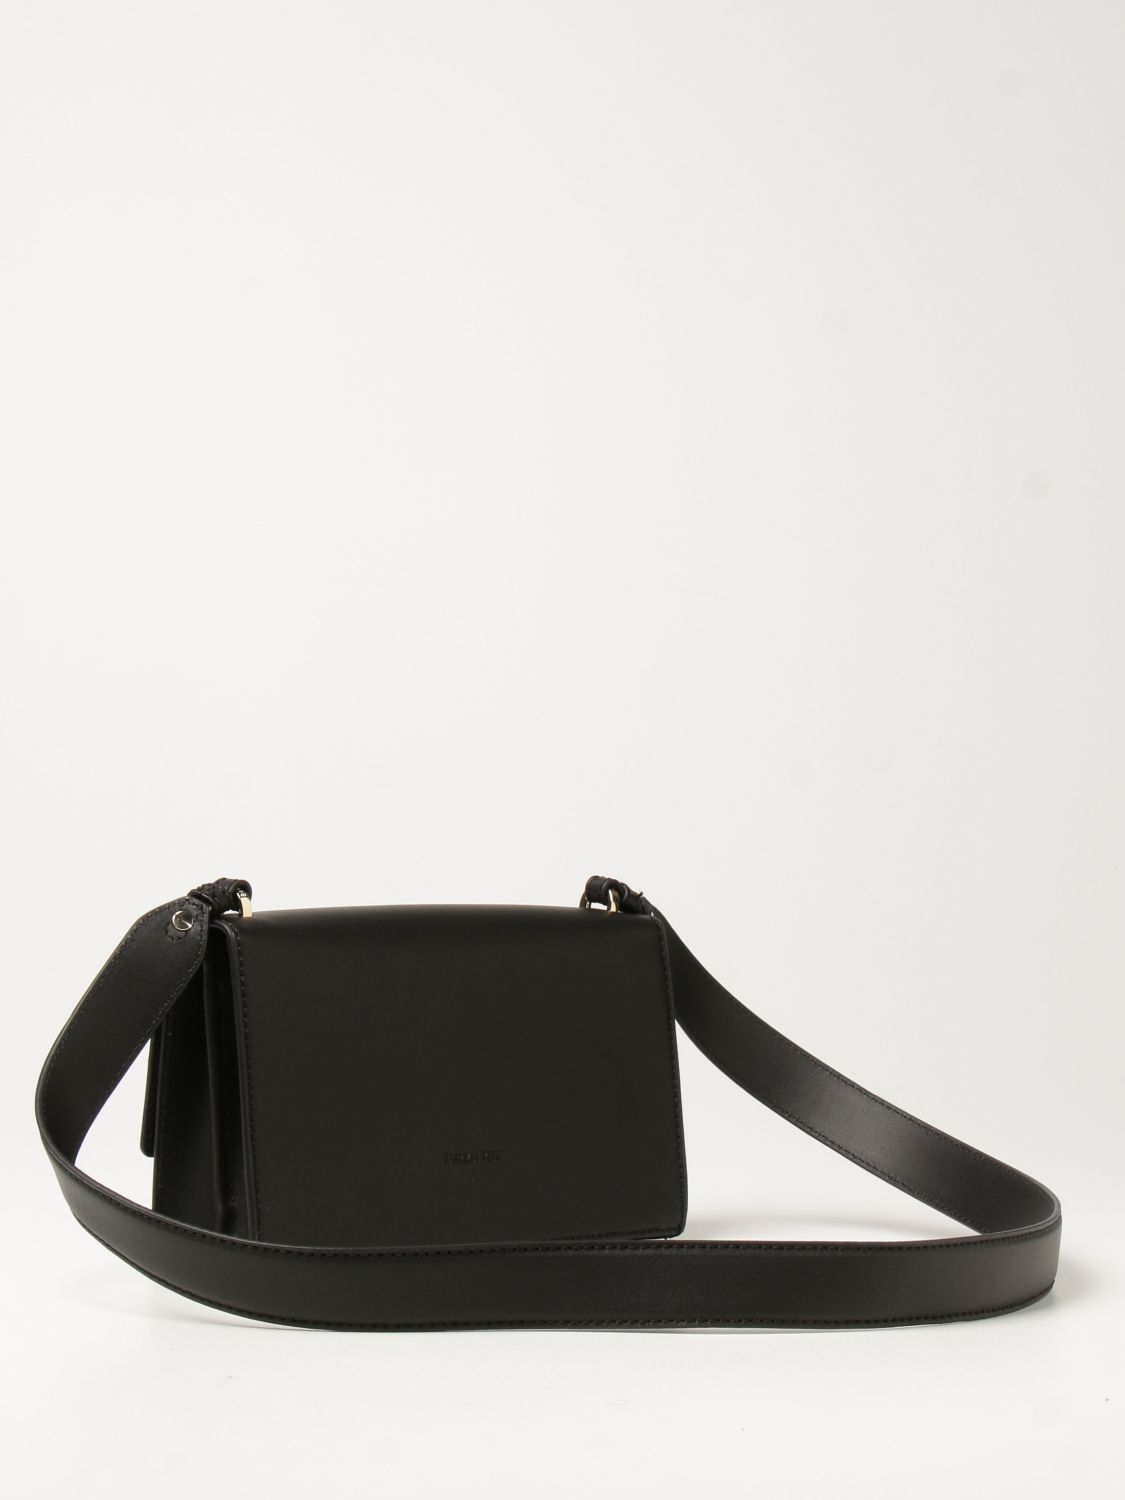 PATRIZIA PEPE: Fly leather bag - Black | Patrizia Pepe shoulder bag ...